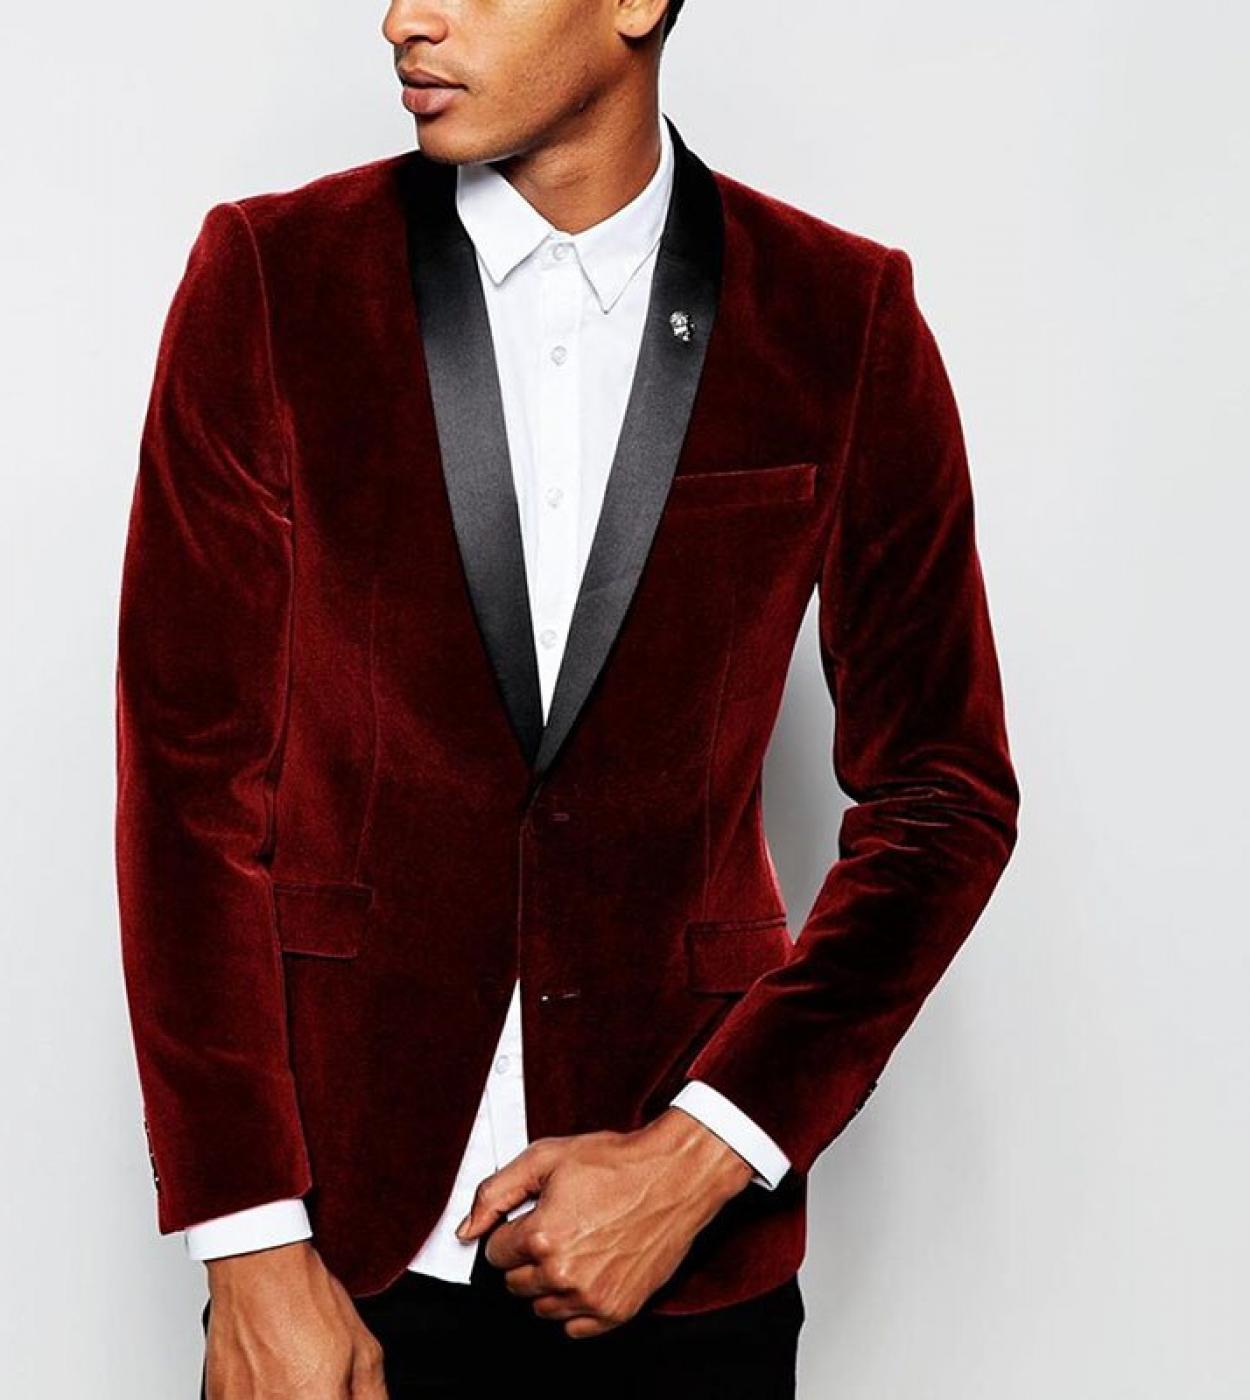  Burgundy Velvet Jacket Black Satin Lapel Groom Tuxedos Suits For Men Groomsman Men Wedding Suits Prom Tuxedos With Pant